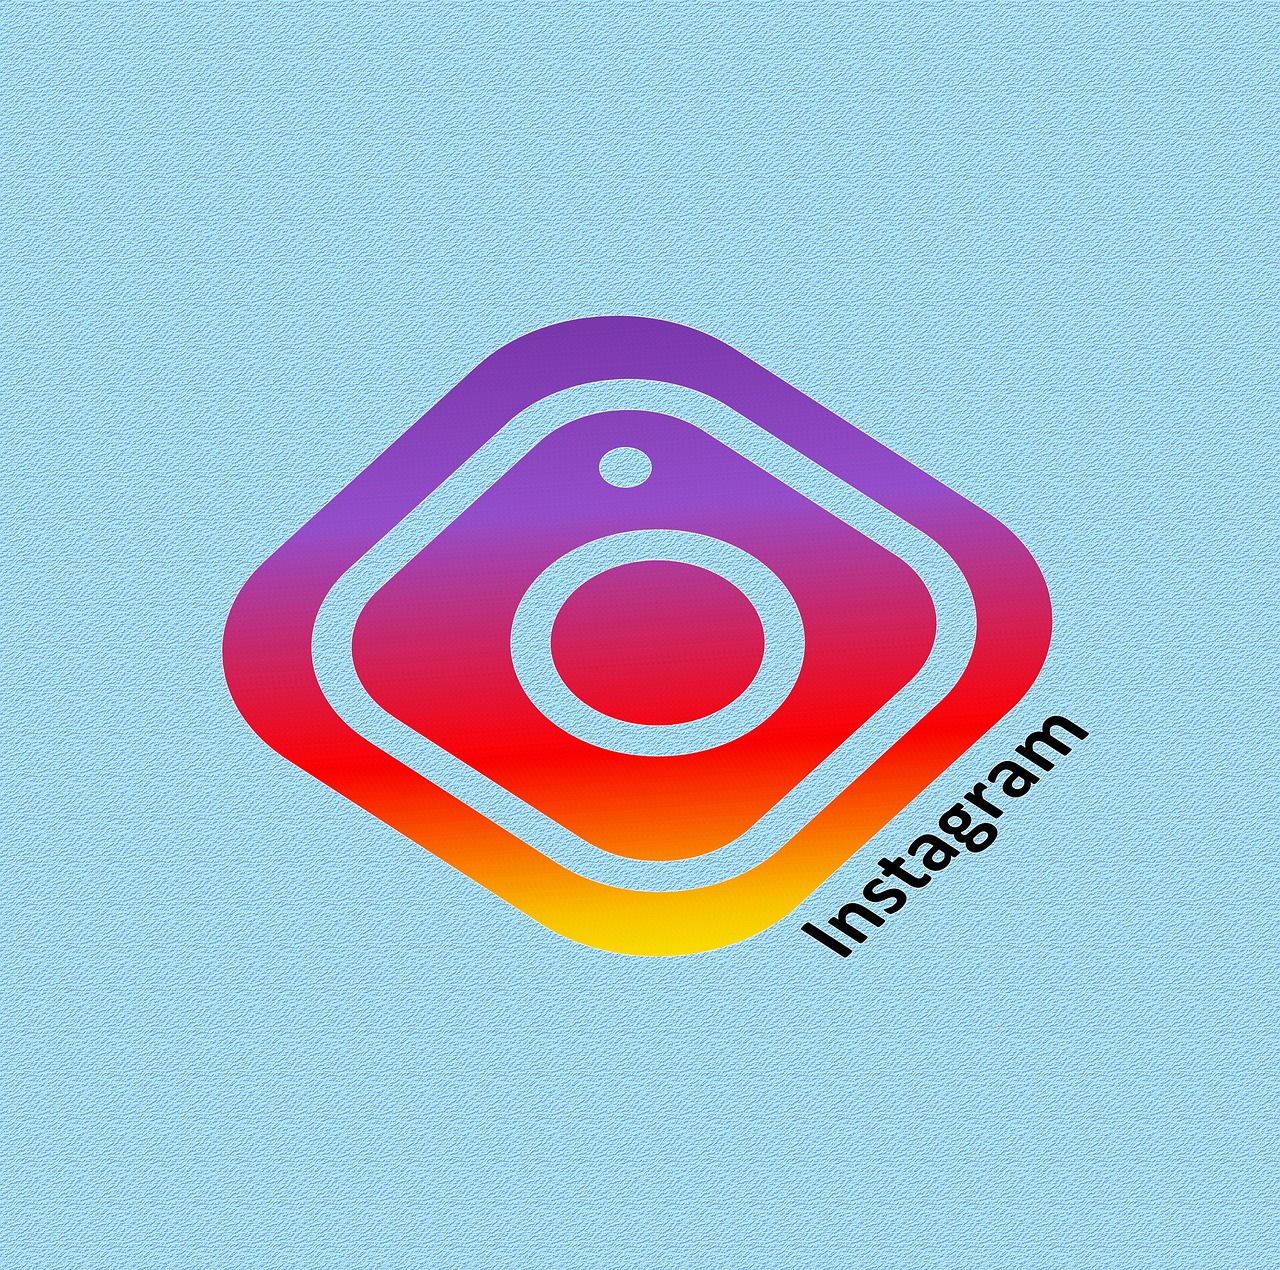 walter genna logo instagram filtro